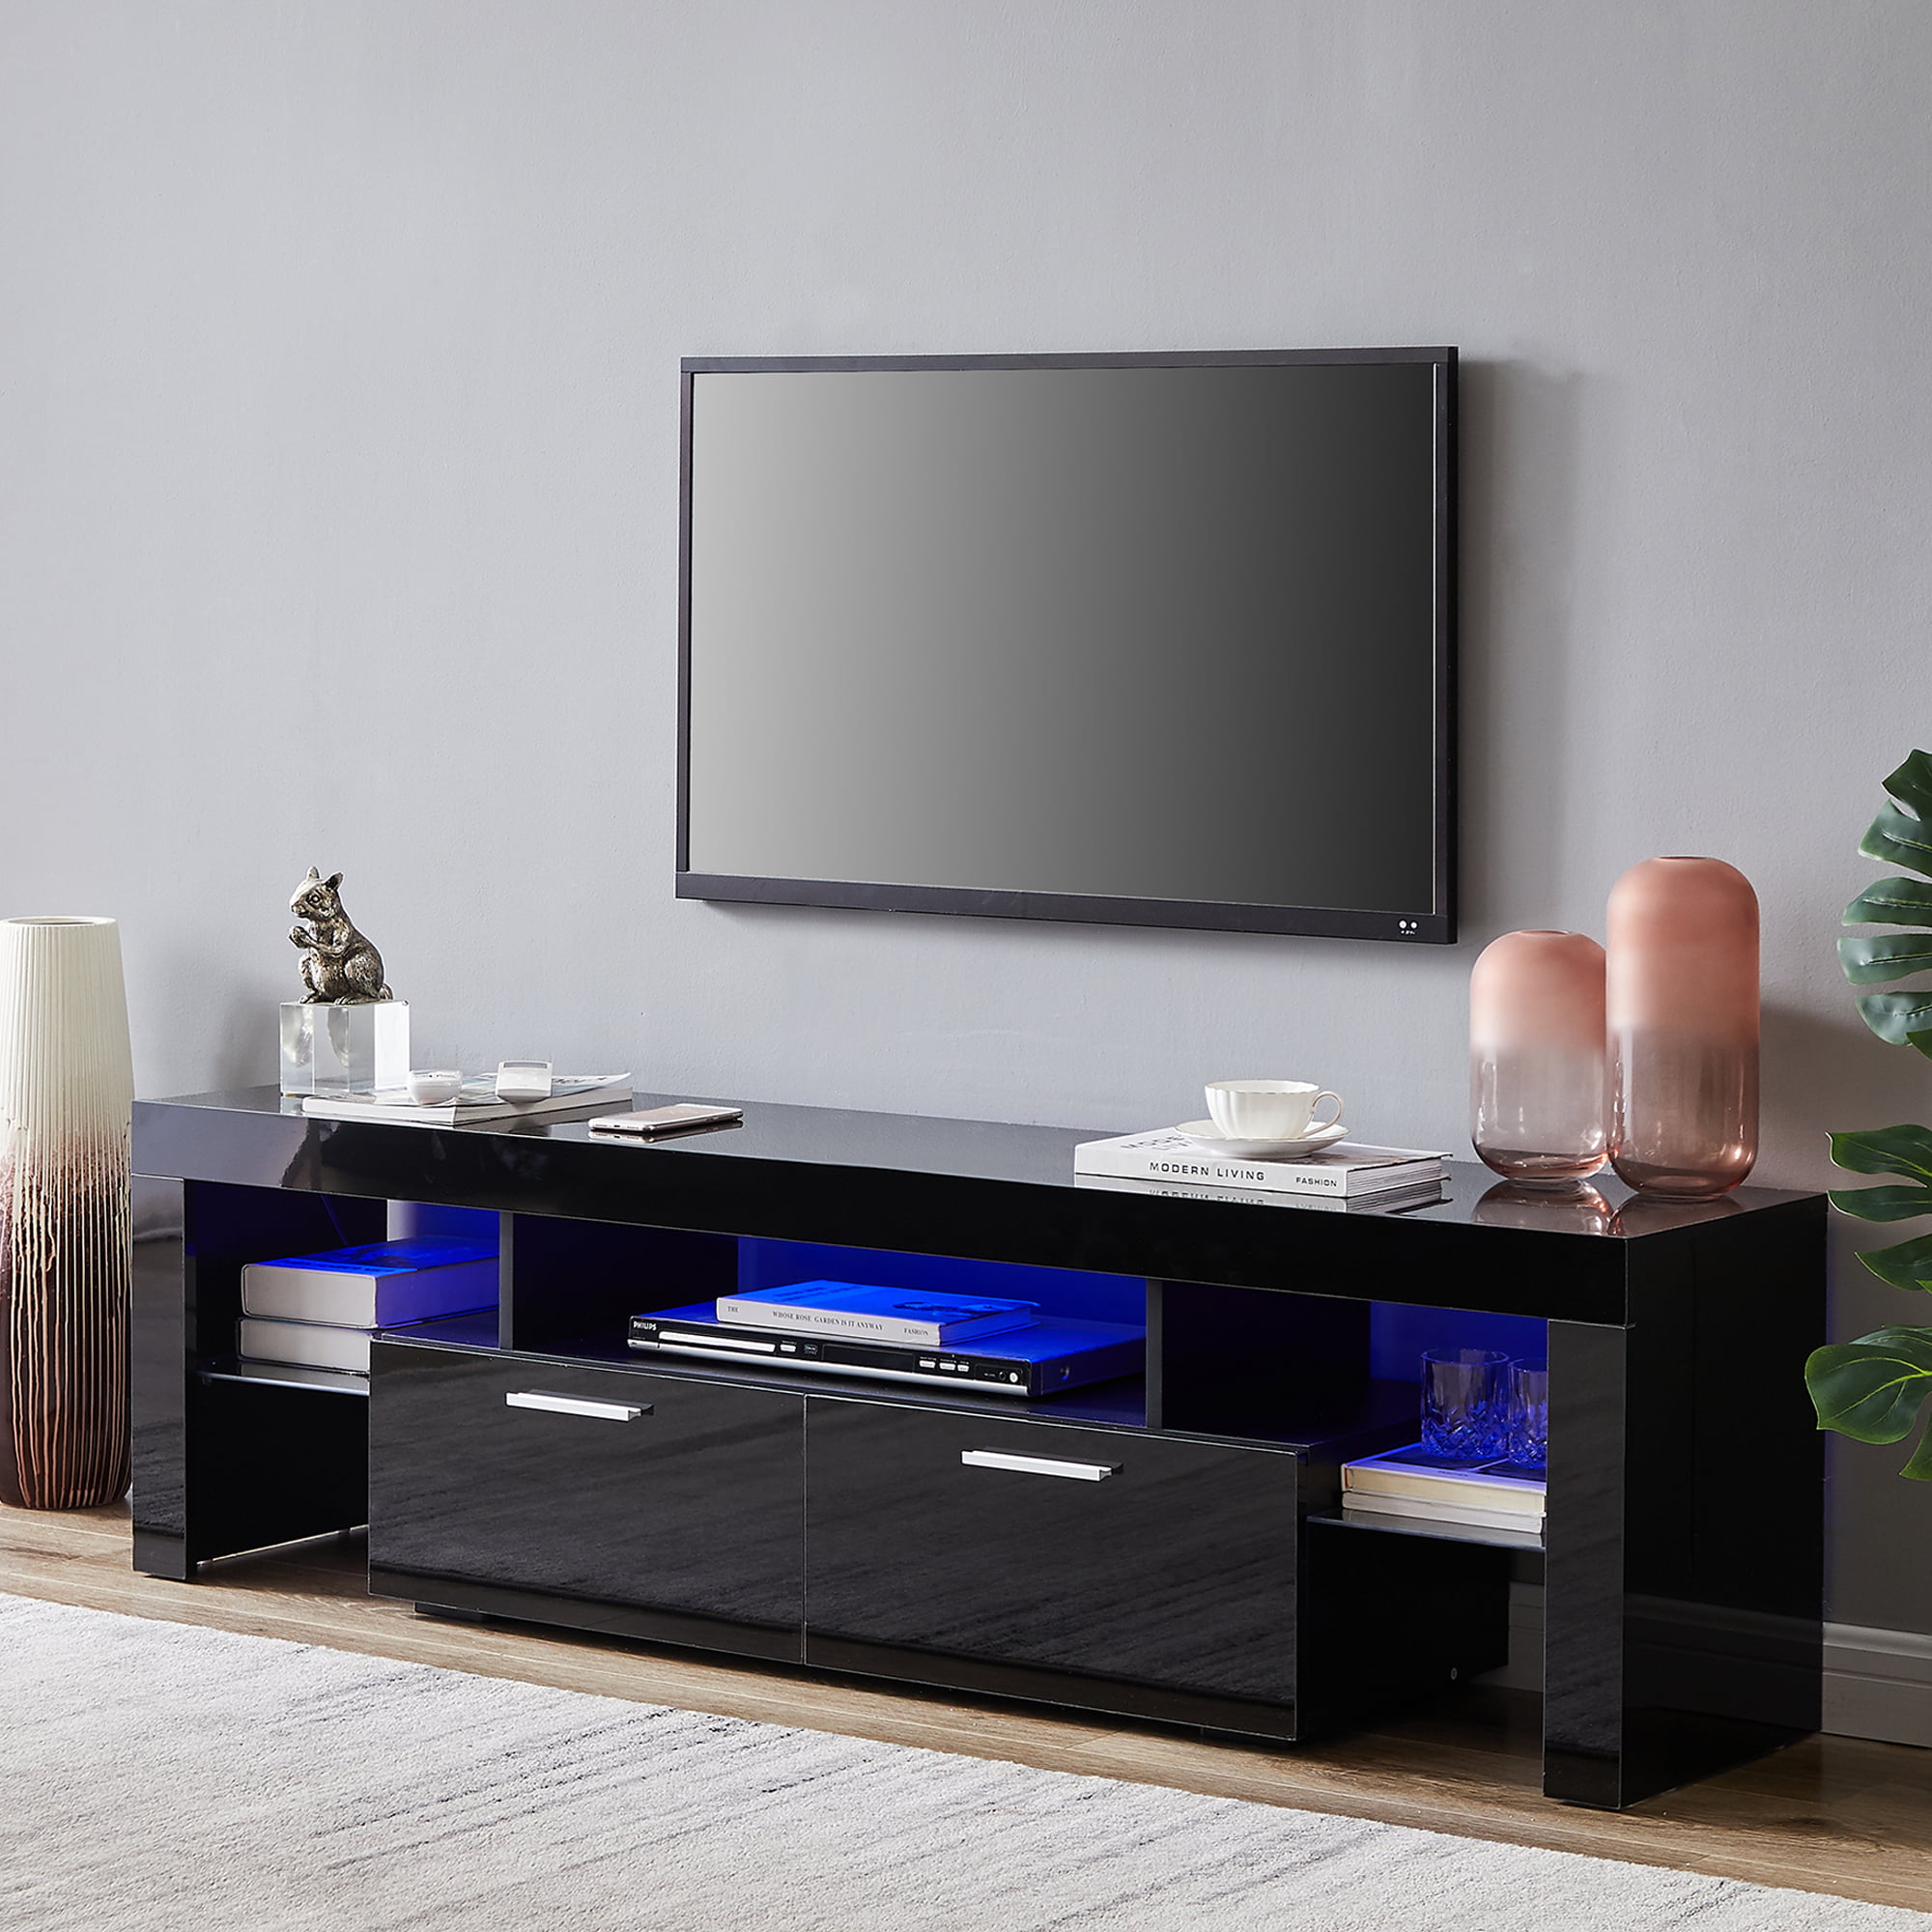 16 Colors LED RGB lights Lliving room Furniture 120cm-B Black Matt and Black High Gloss Table Black TV Cabinet Table with Storage Modern LED TV Stand Unit 